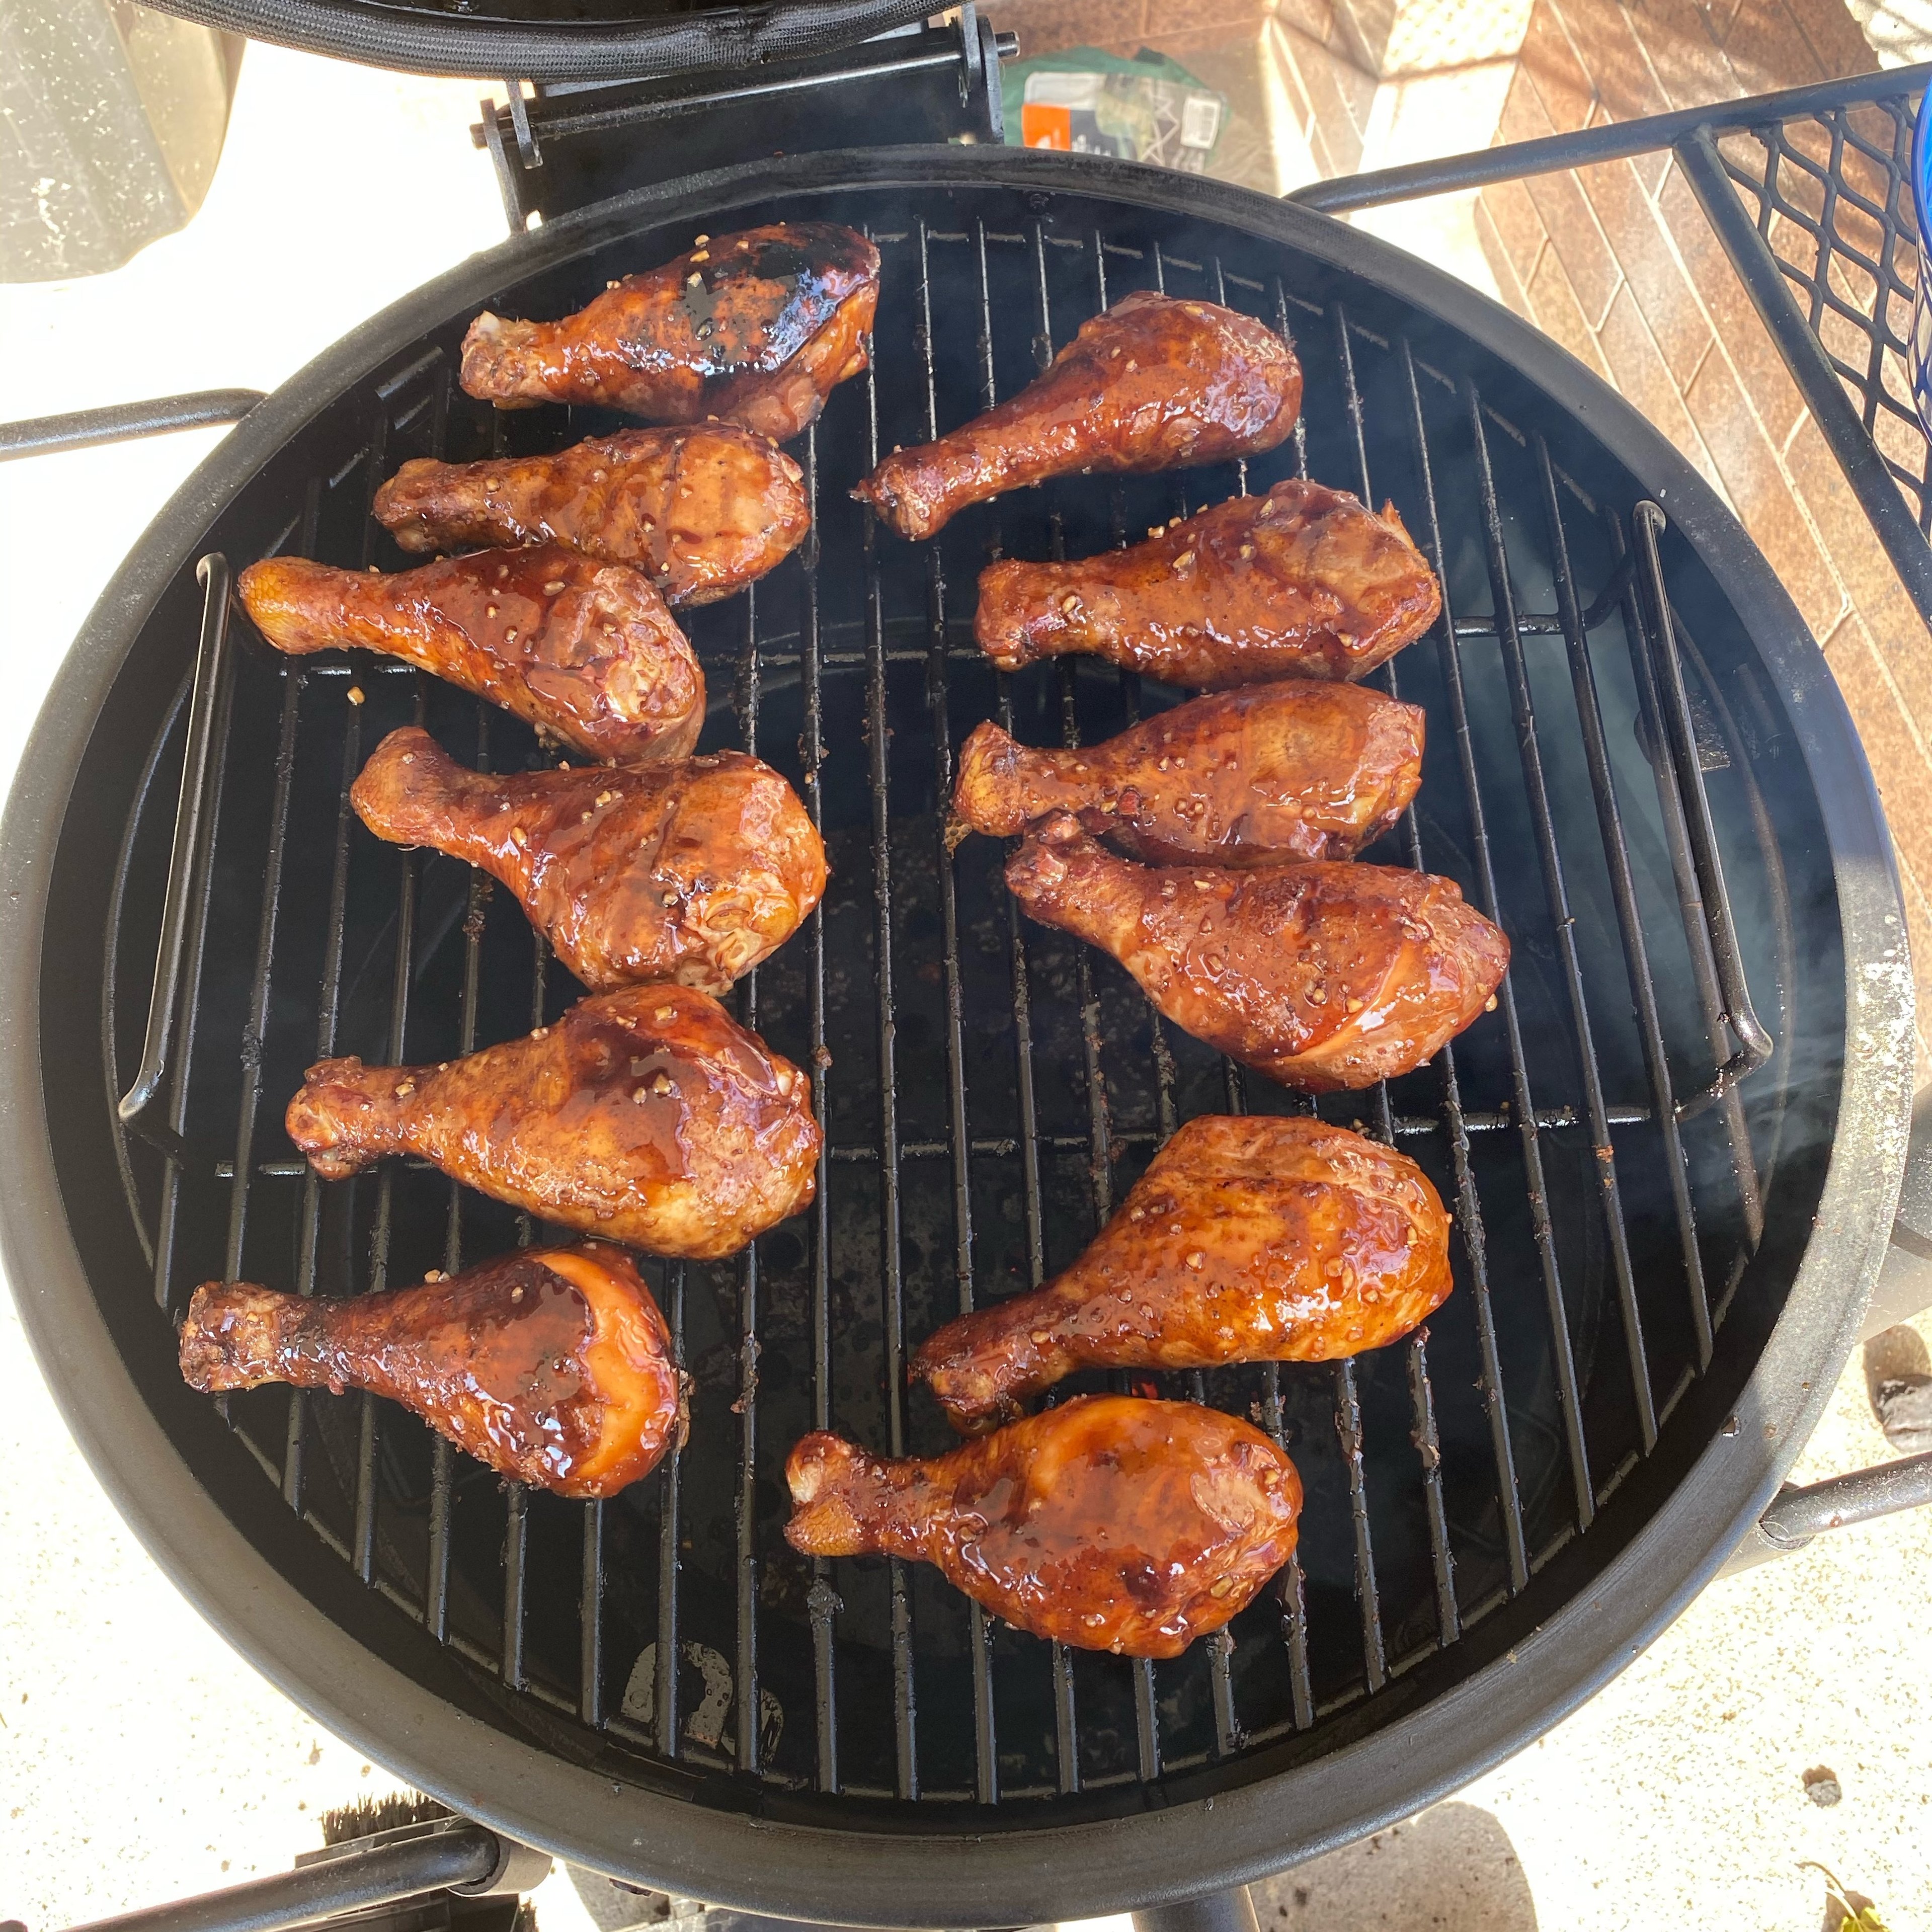 Smoked Chicken Legs